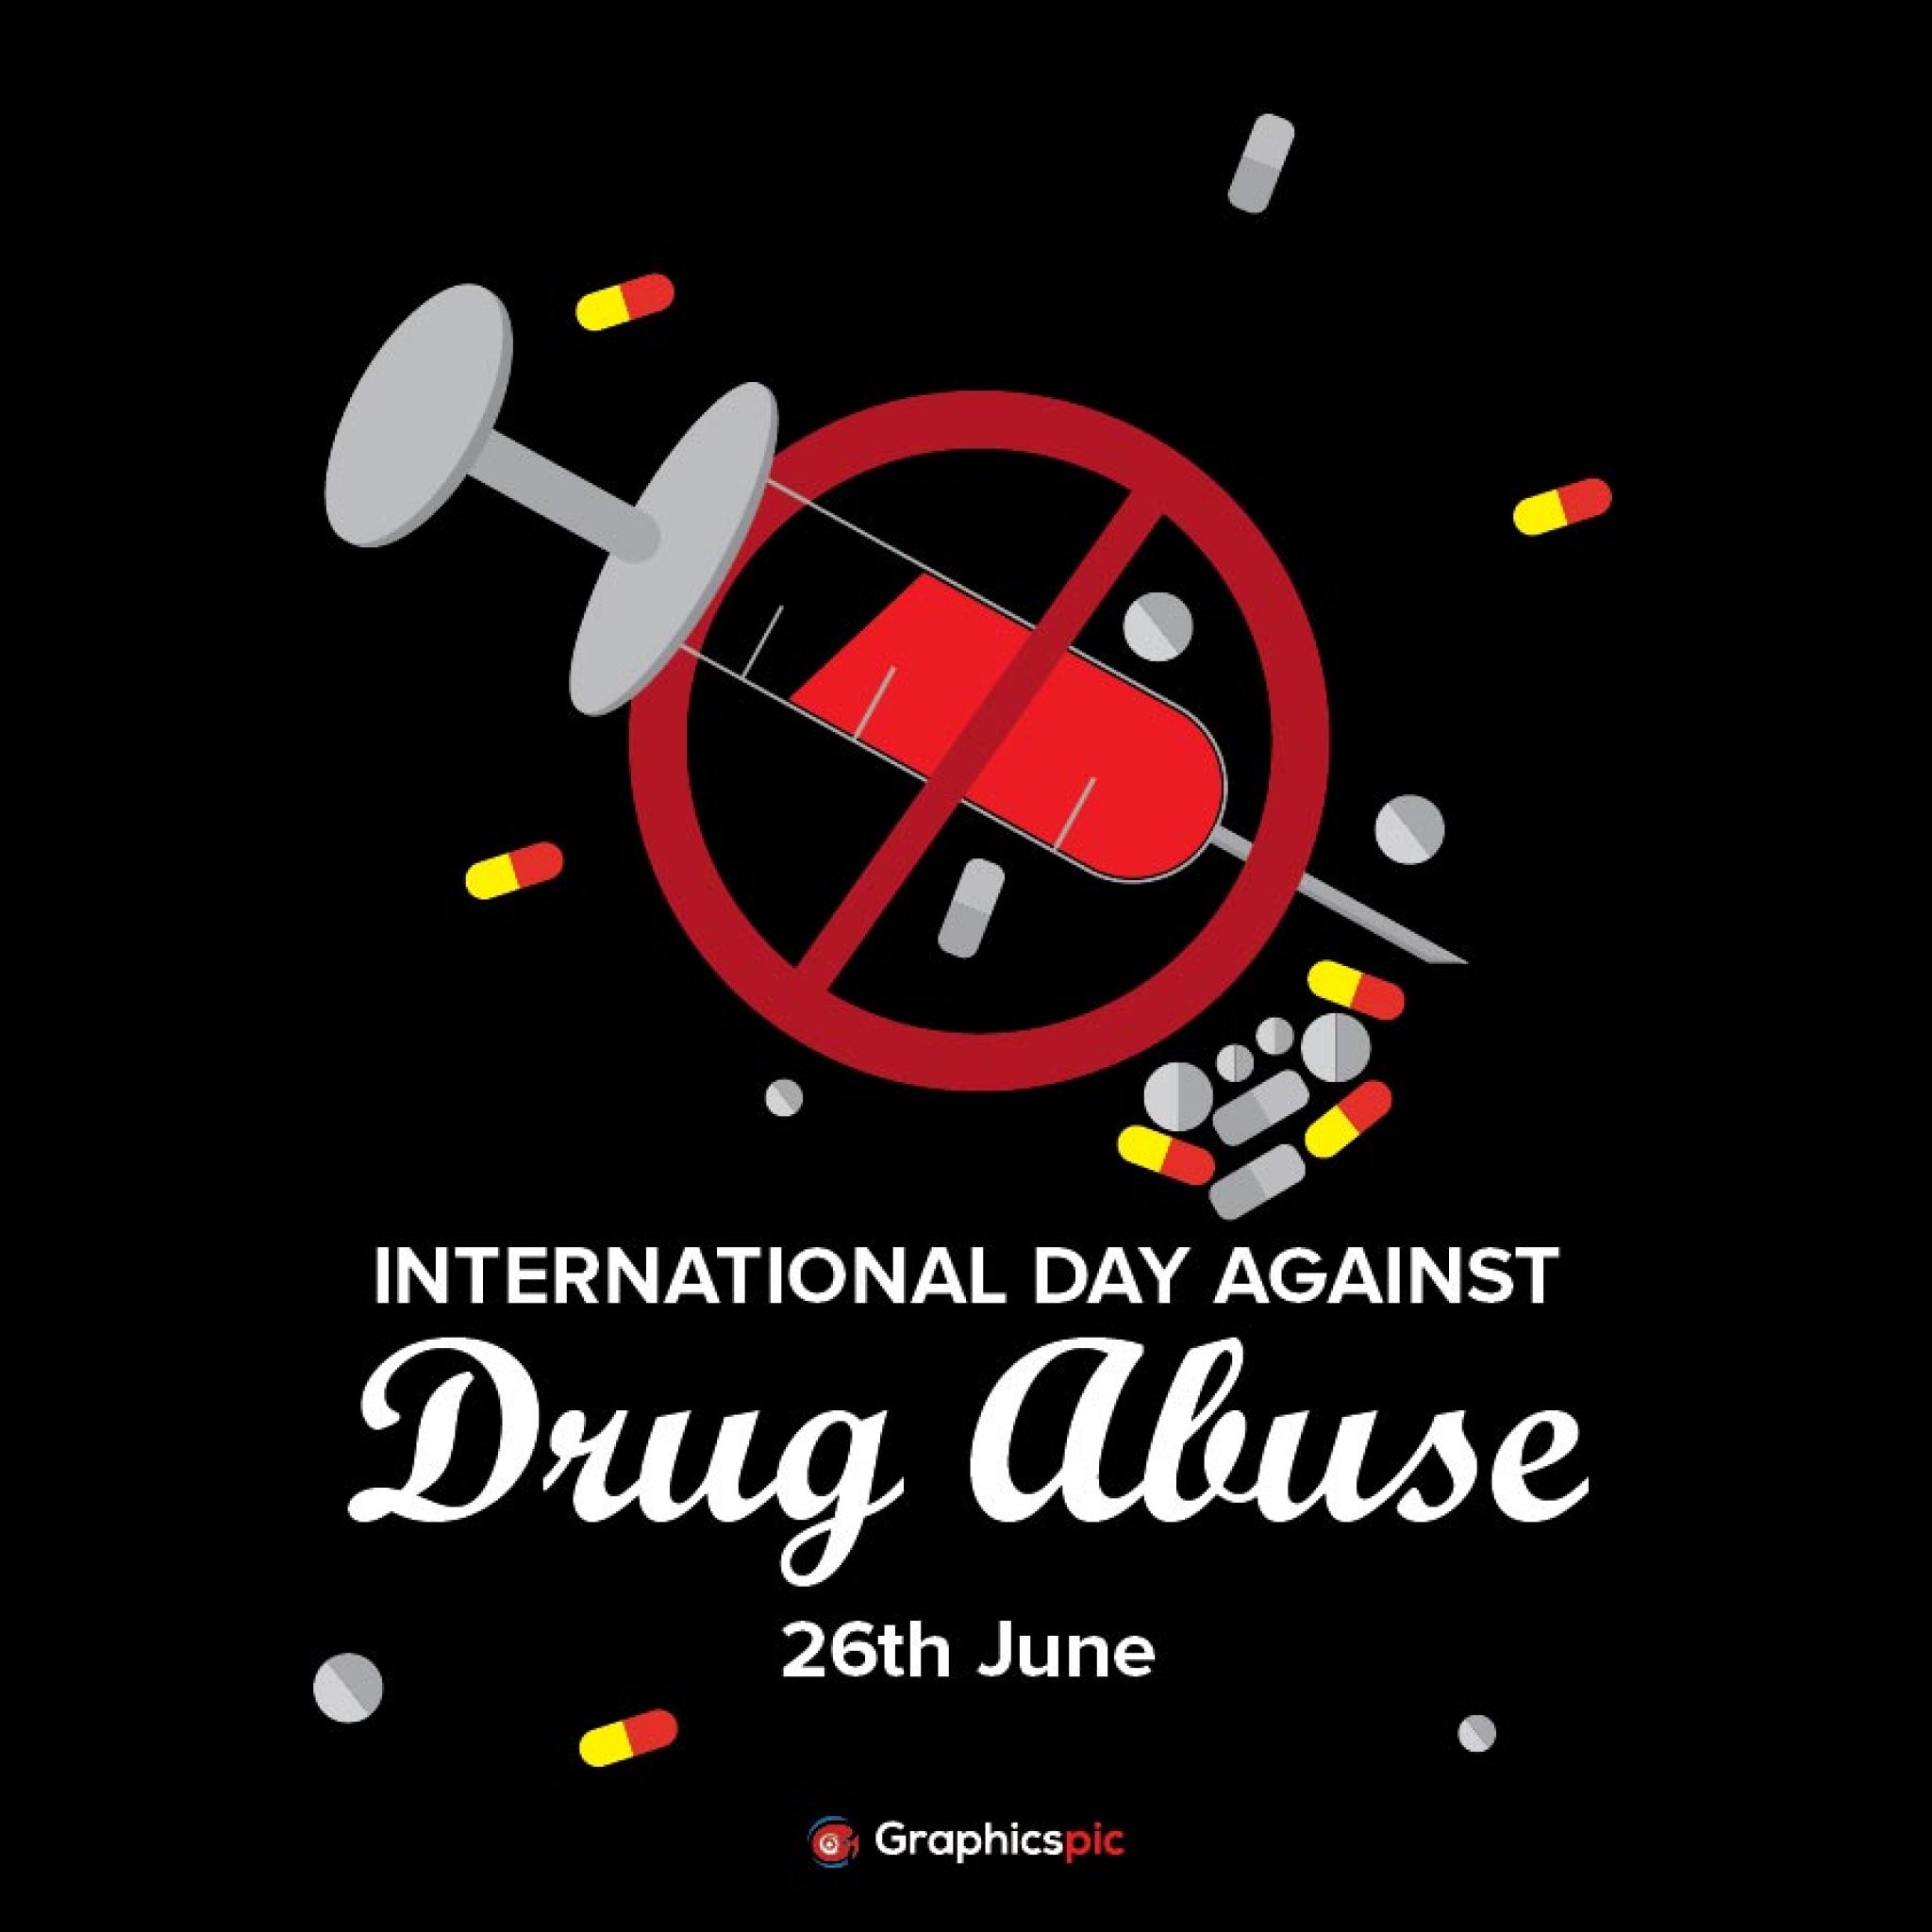 International day against drug abuse 26th June illustration background